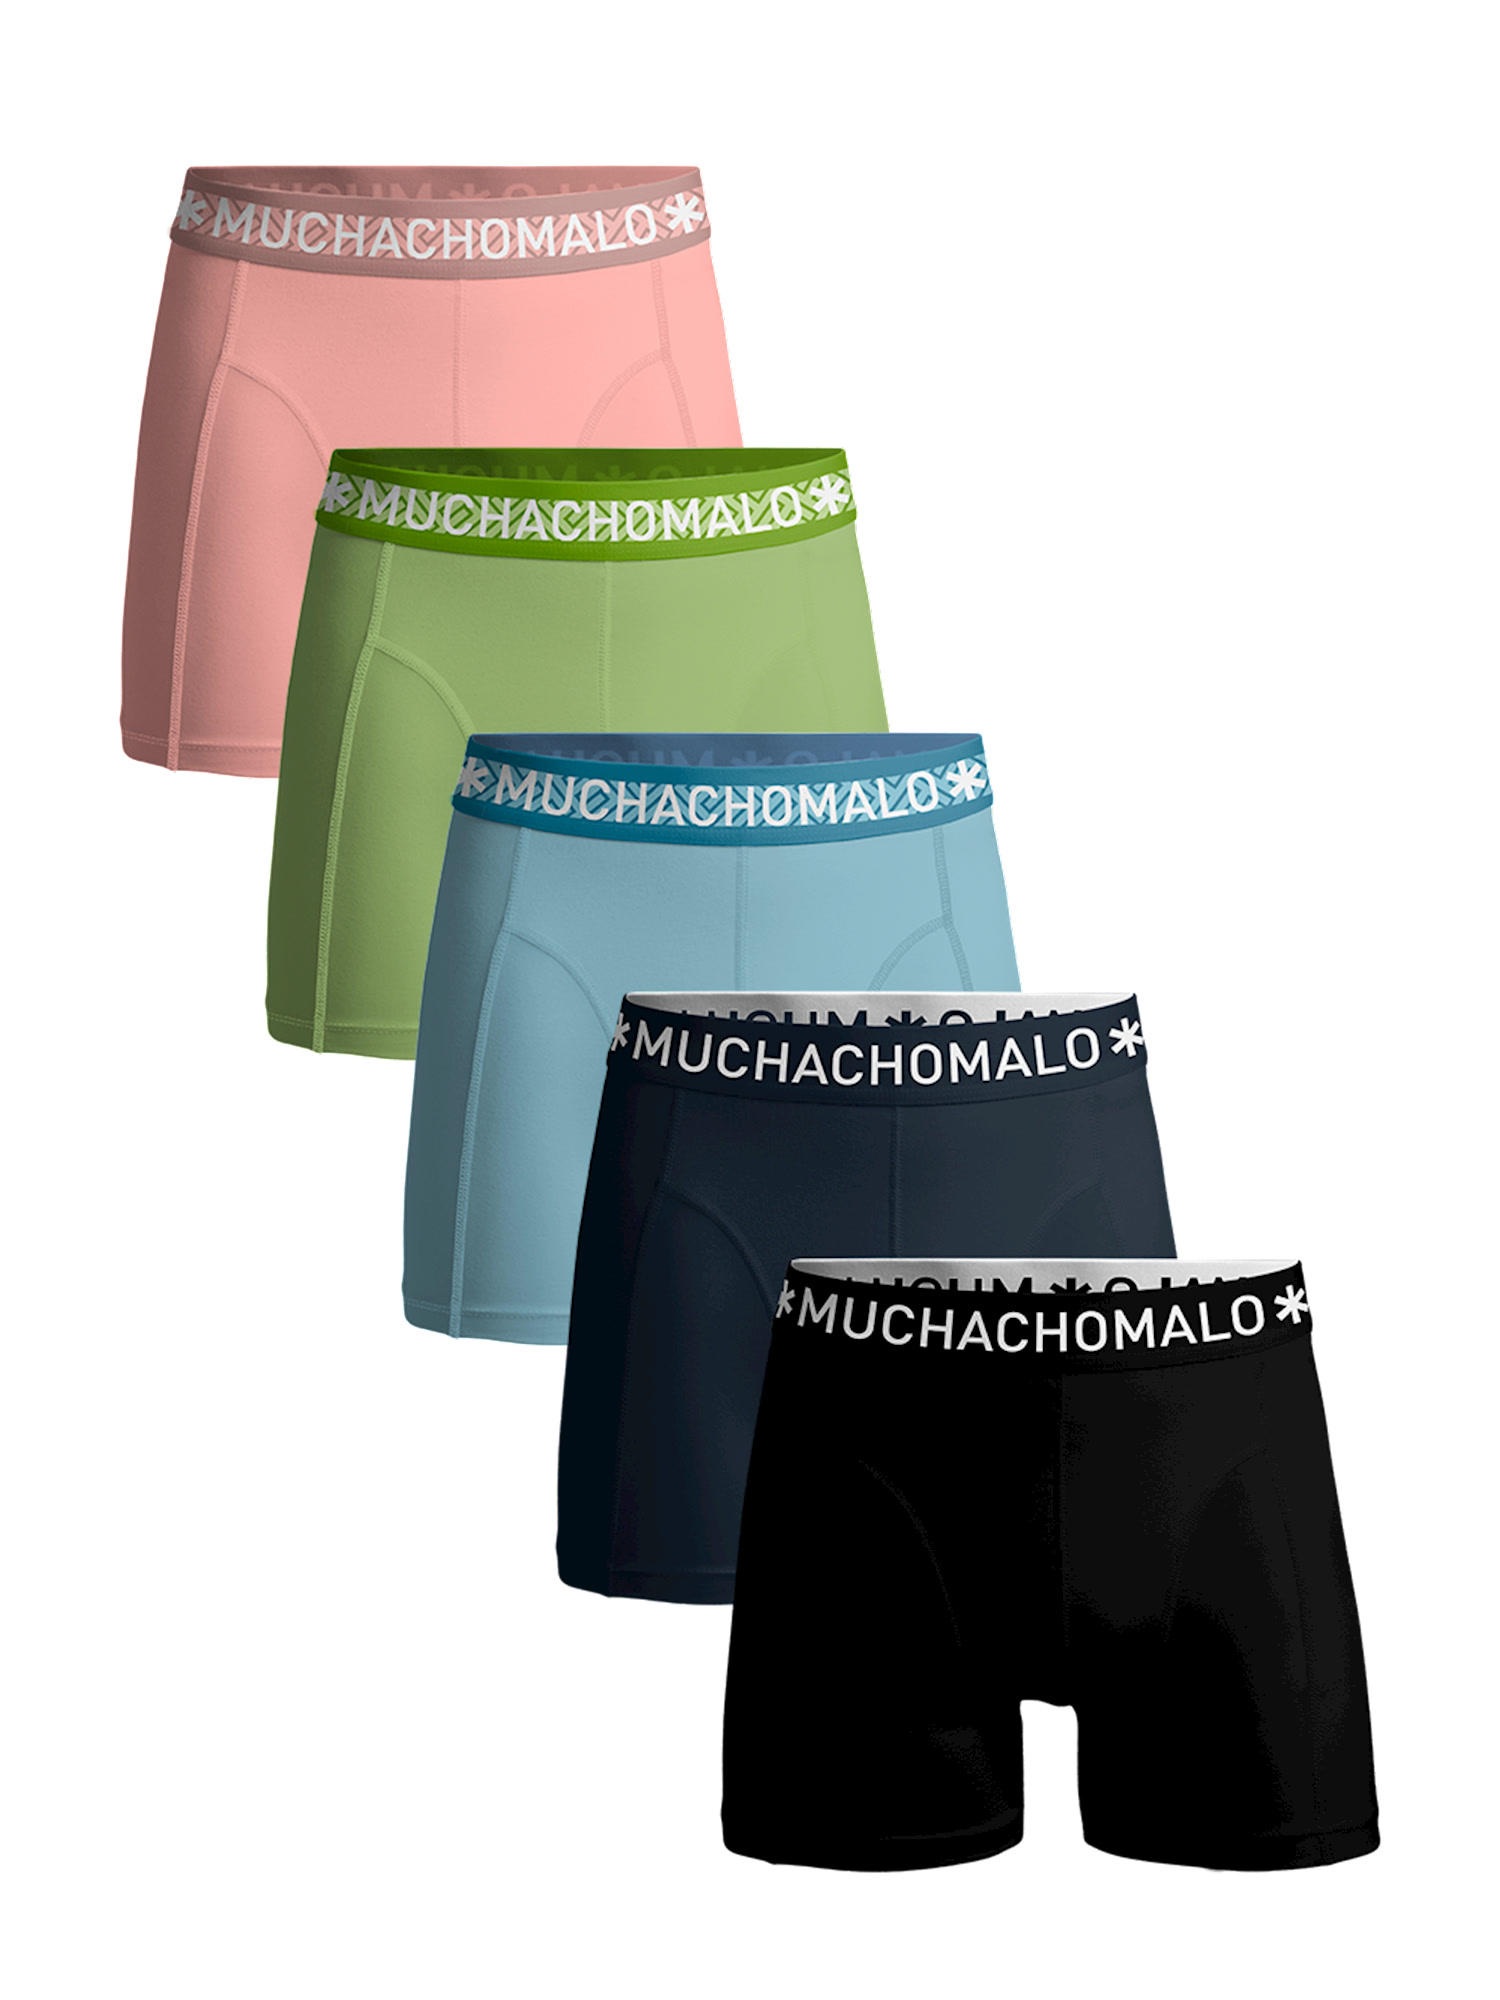 Боксеры Muchachomalo 5er-Set: Boxershorts, цвет Black/Blue/Blue/Green/Pink боксеры muchachomalo 2er set boxershorts цвет black black blue blue